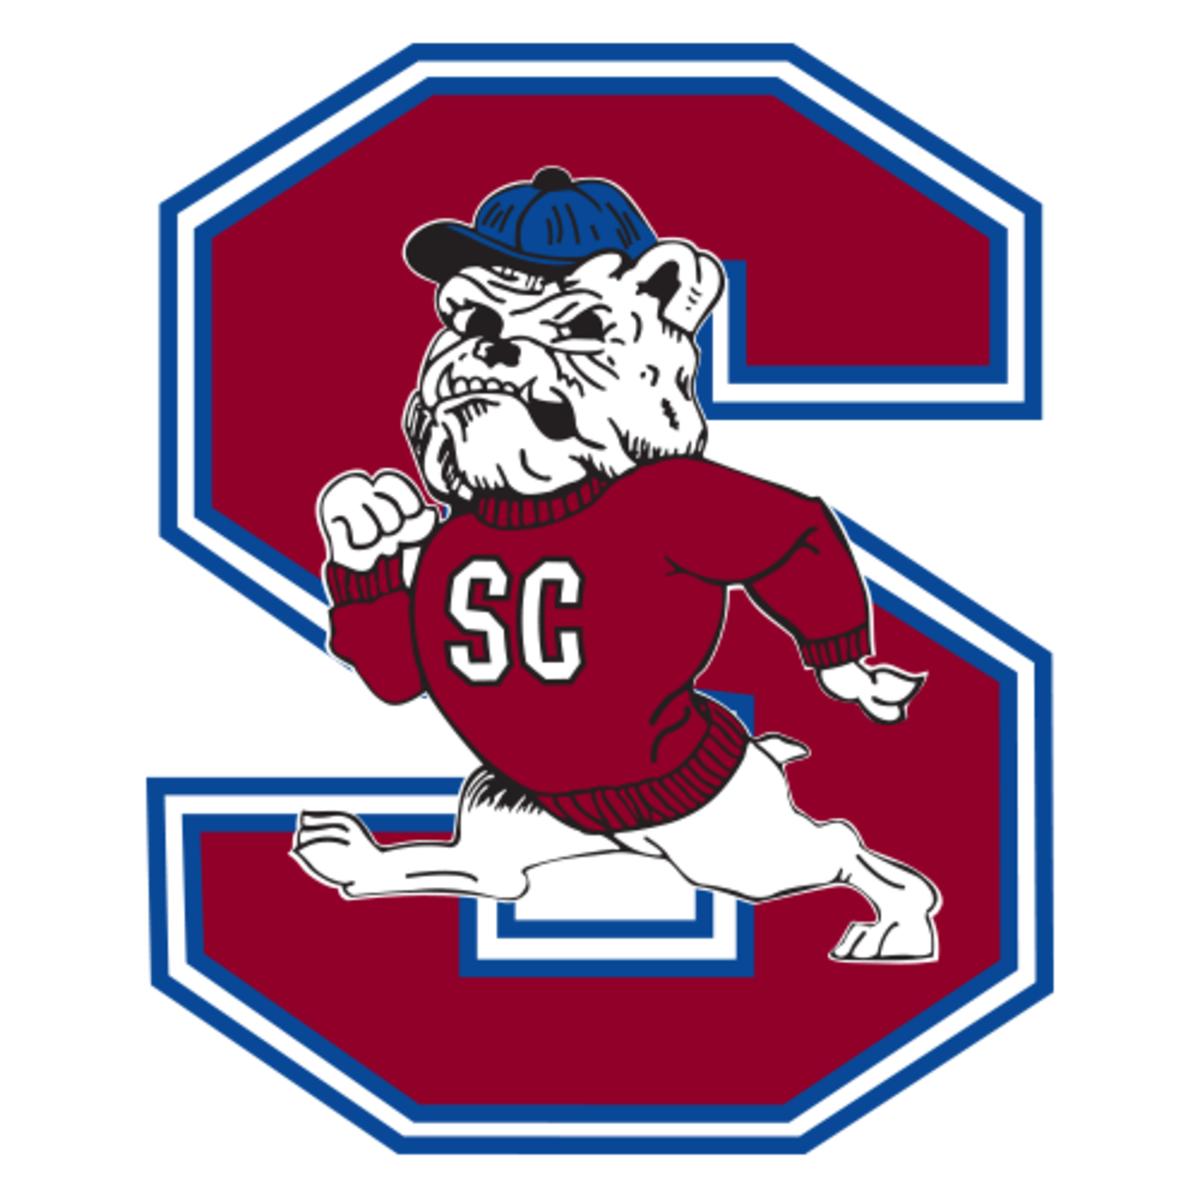 South Carolina State bulldogs football logo